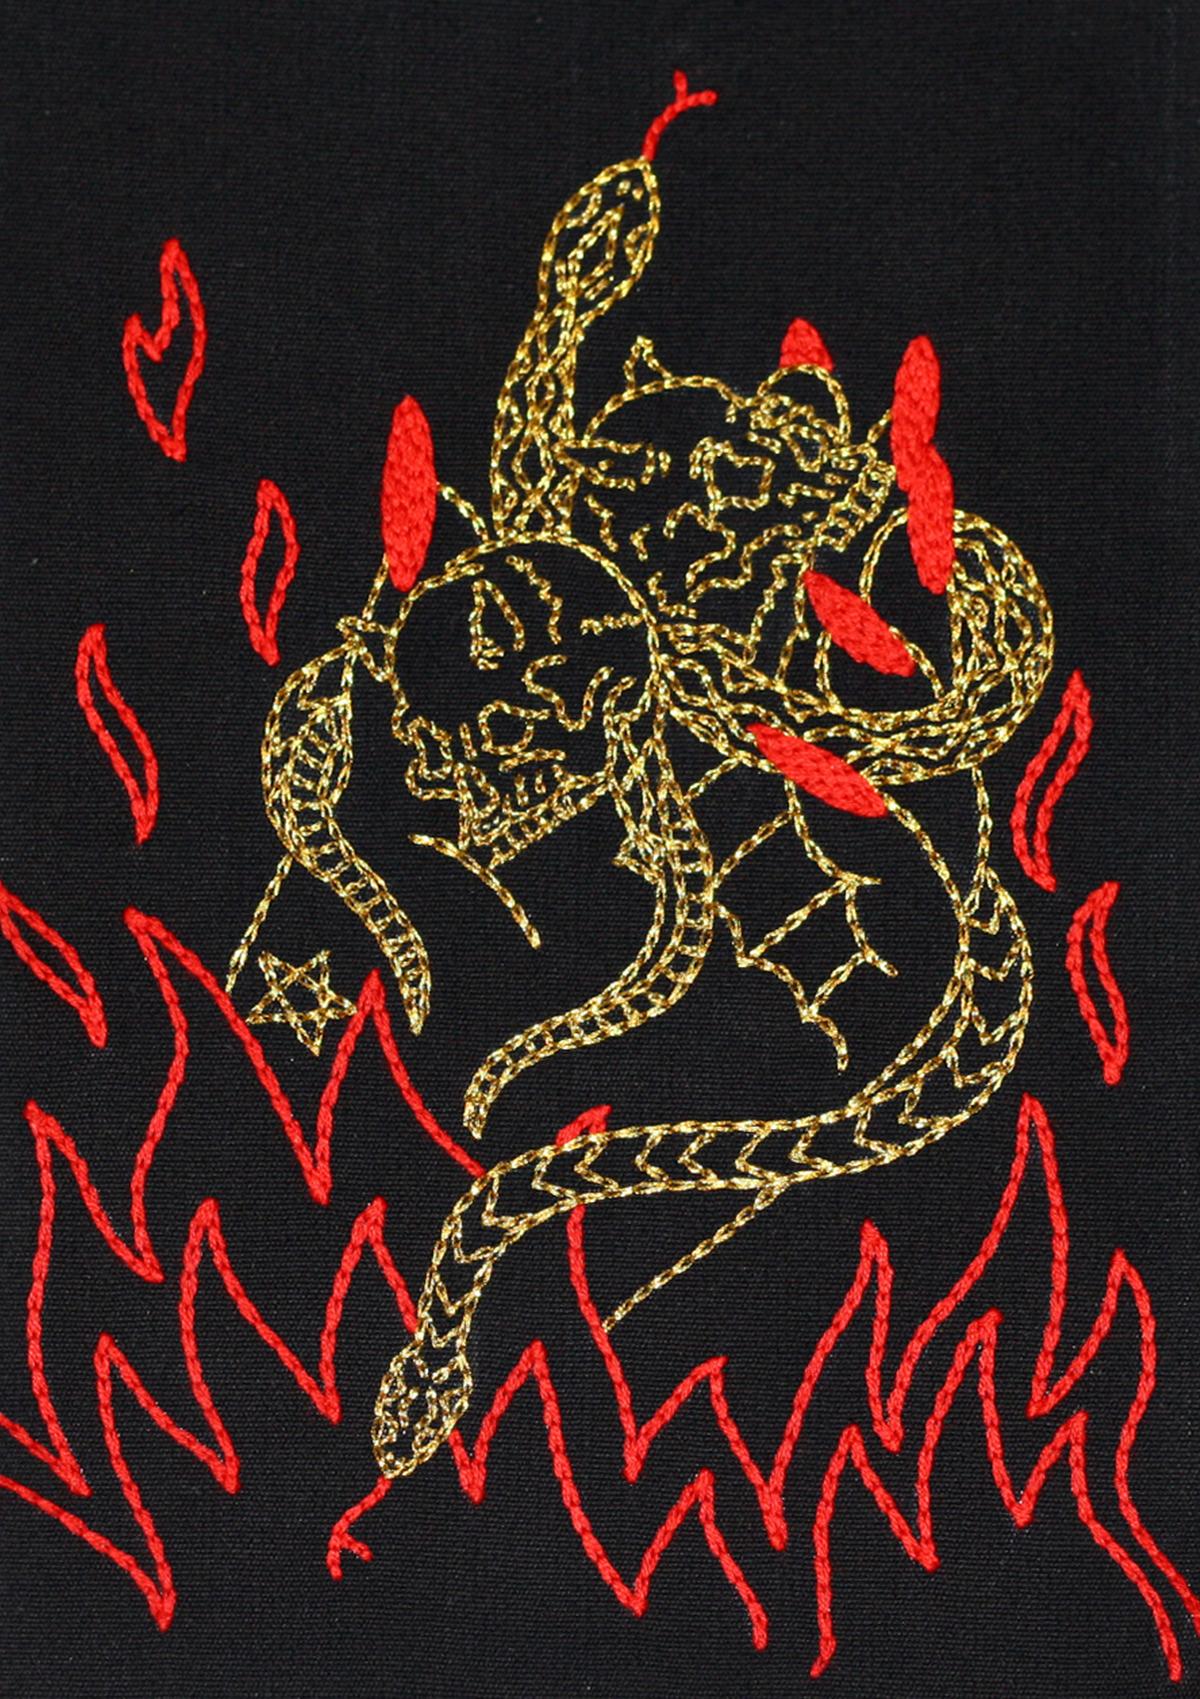 El Diablo, 2019 by Maria Jose Franco Maldonado
From The Ventura Series. 
Embroidery thread on canvas
Image size: 27 cm H x 17 cm W
Frame size: 40 cm H x 30 cm W x 3 cm D
Unique

Blackwood frame with plexiglass
___
Maria Jose Franco Maldonado’s